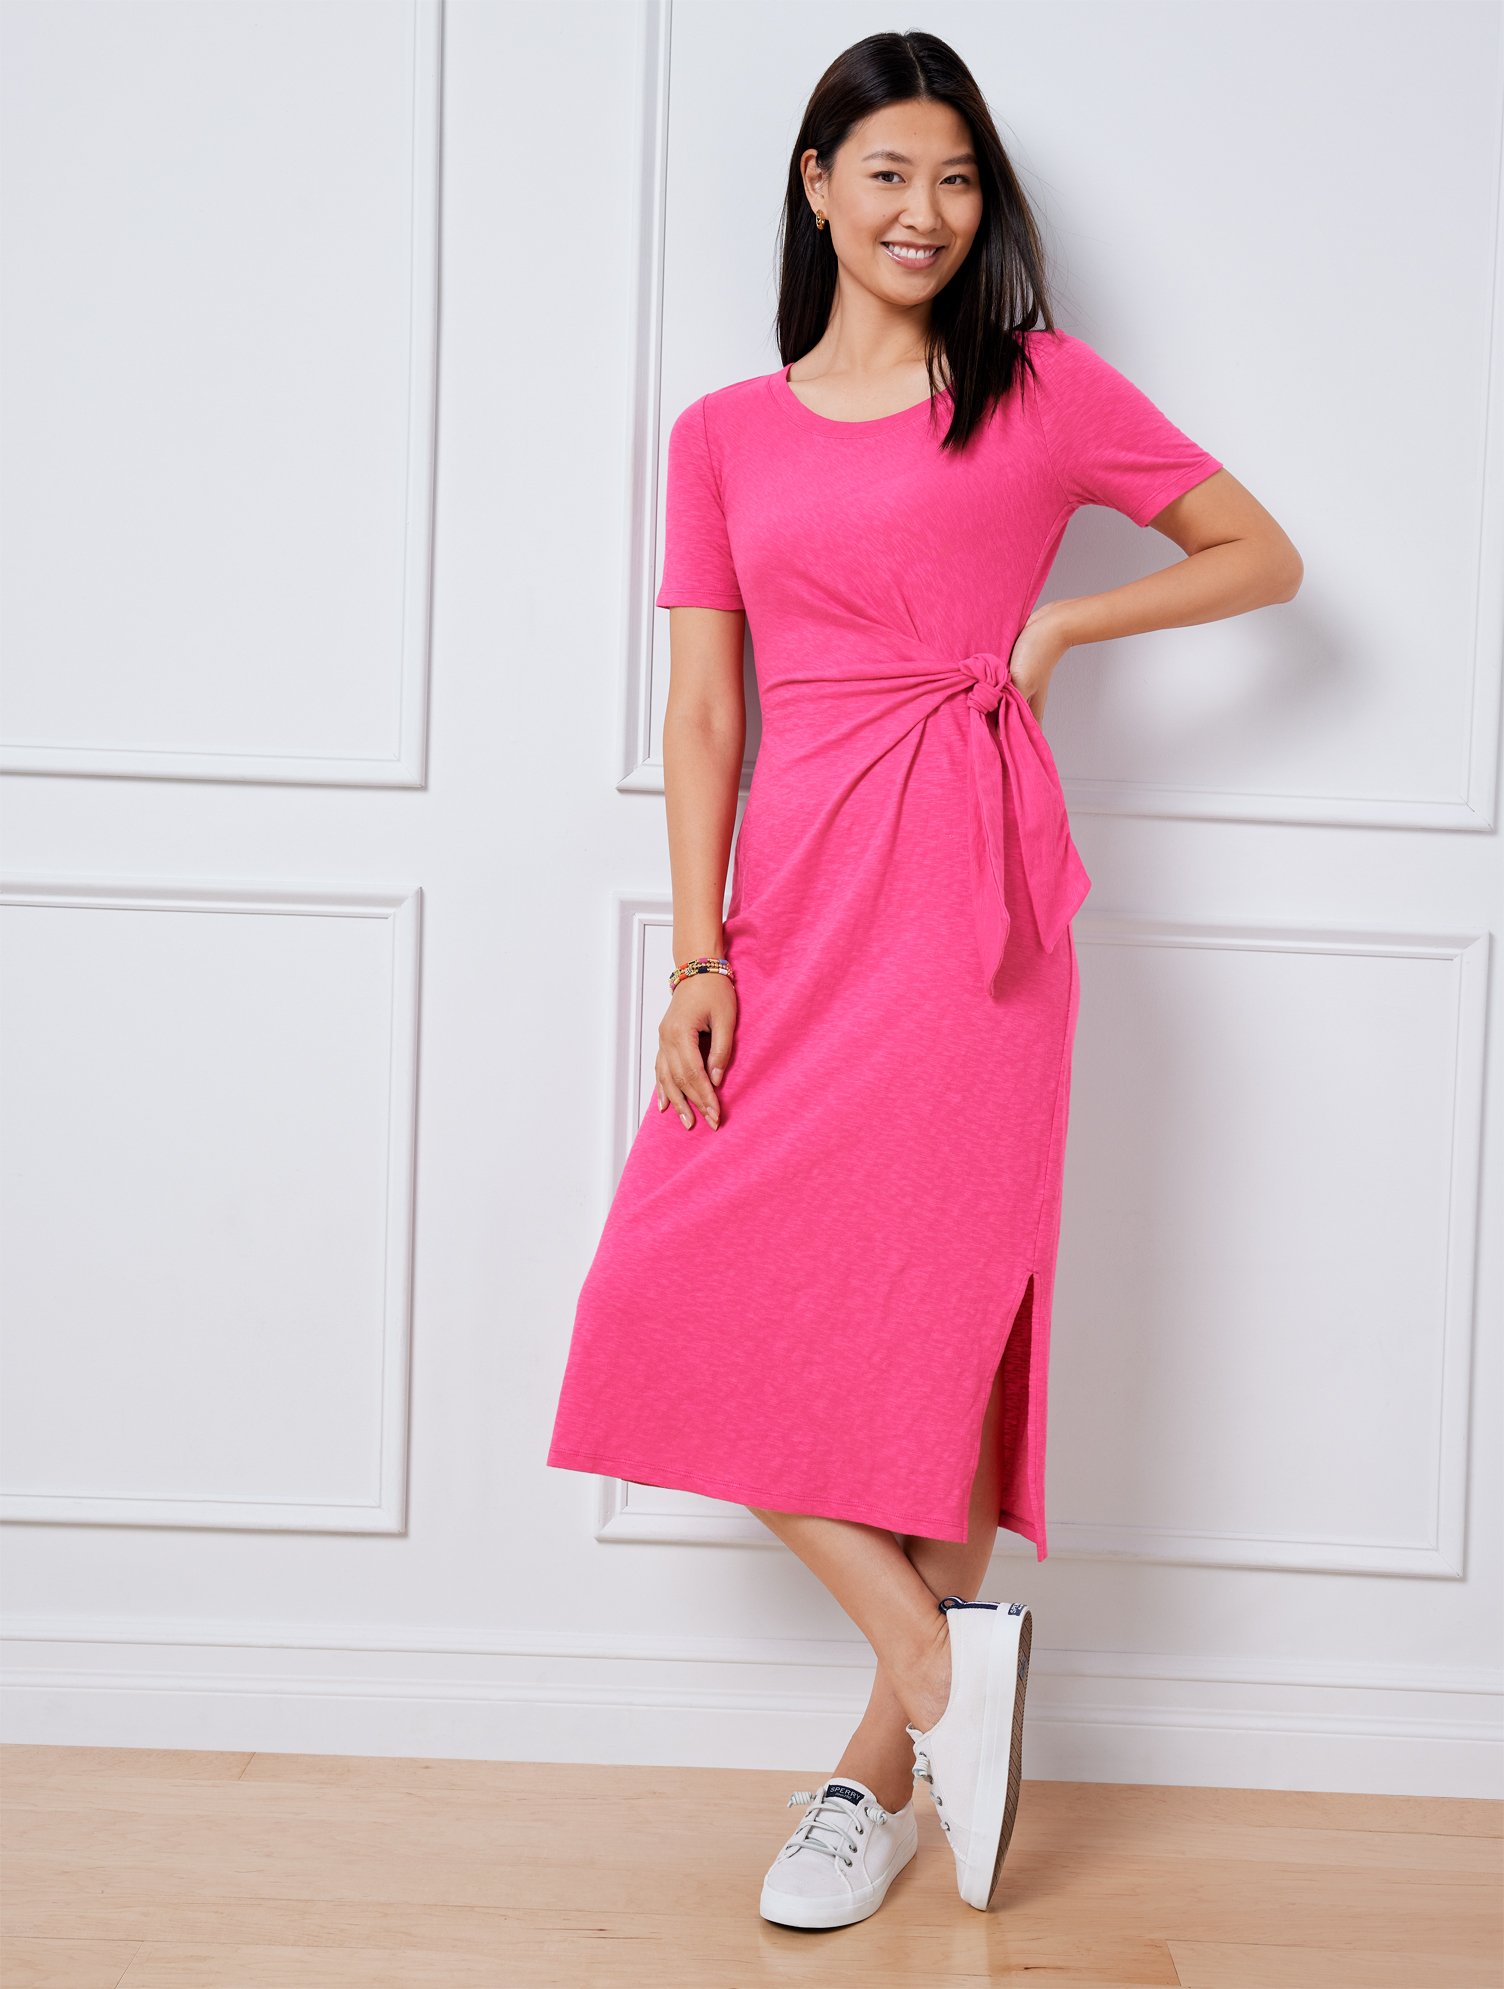 Talbots Nantucket Slub Side Tie Midi Dress - Vivid Pink - Large - 100% Cotton